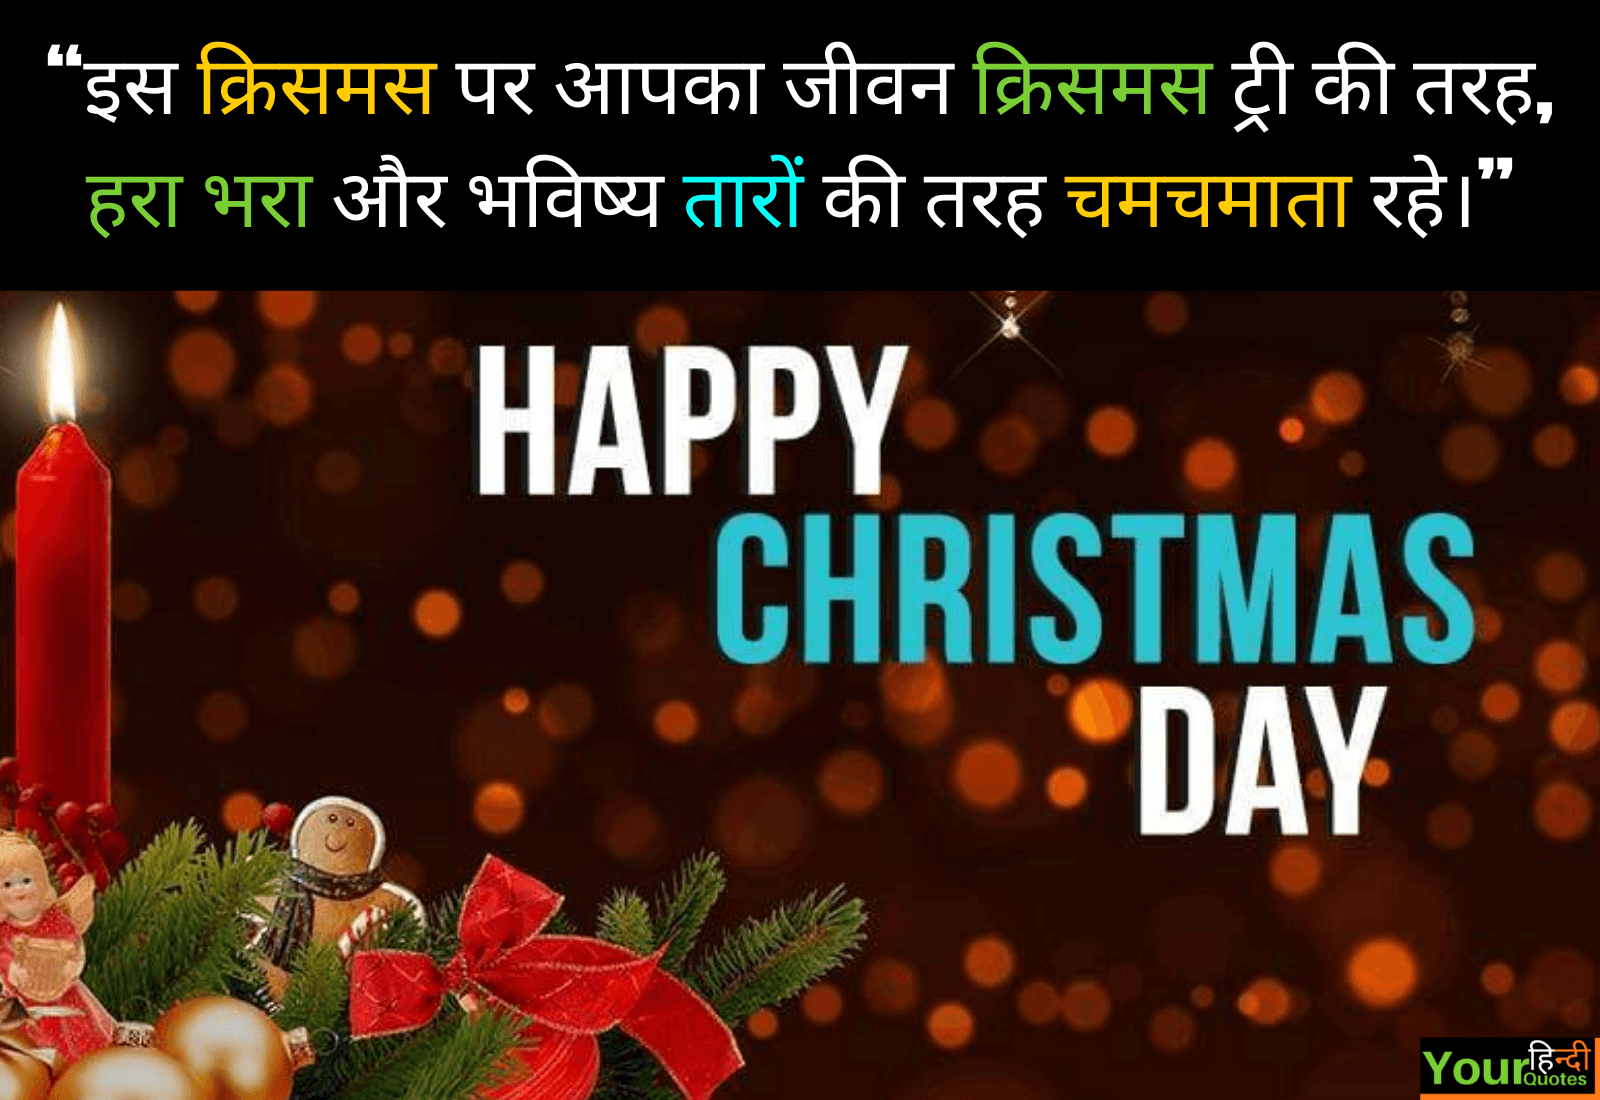 Merry Christmas Hindi Wishes image